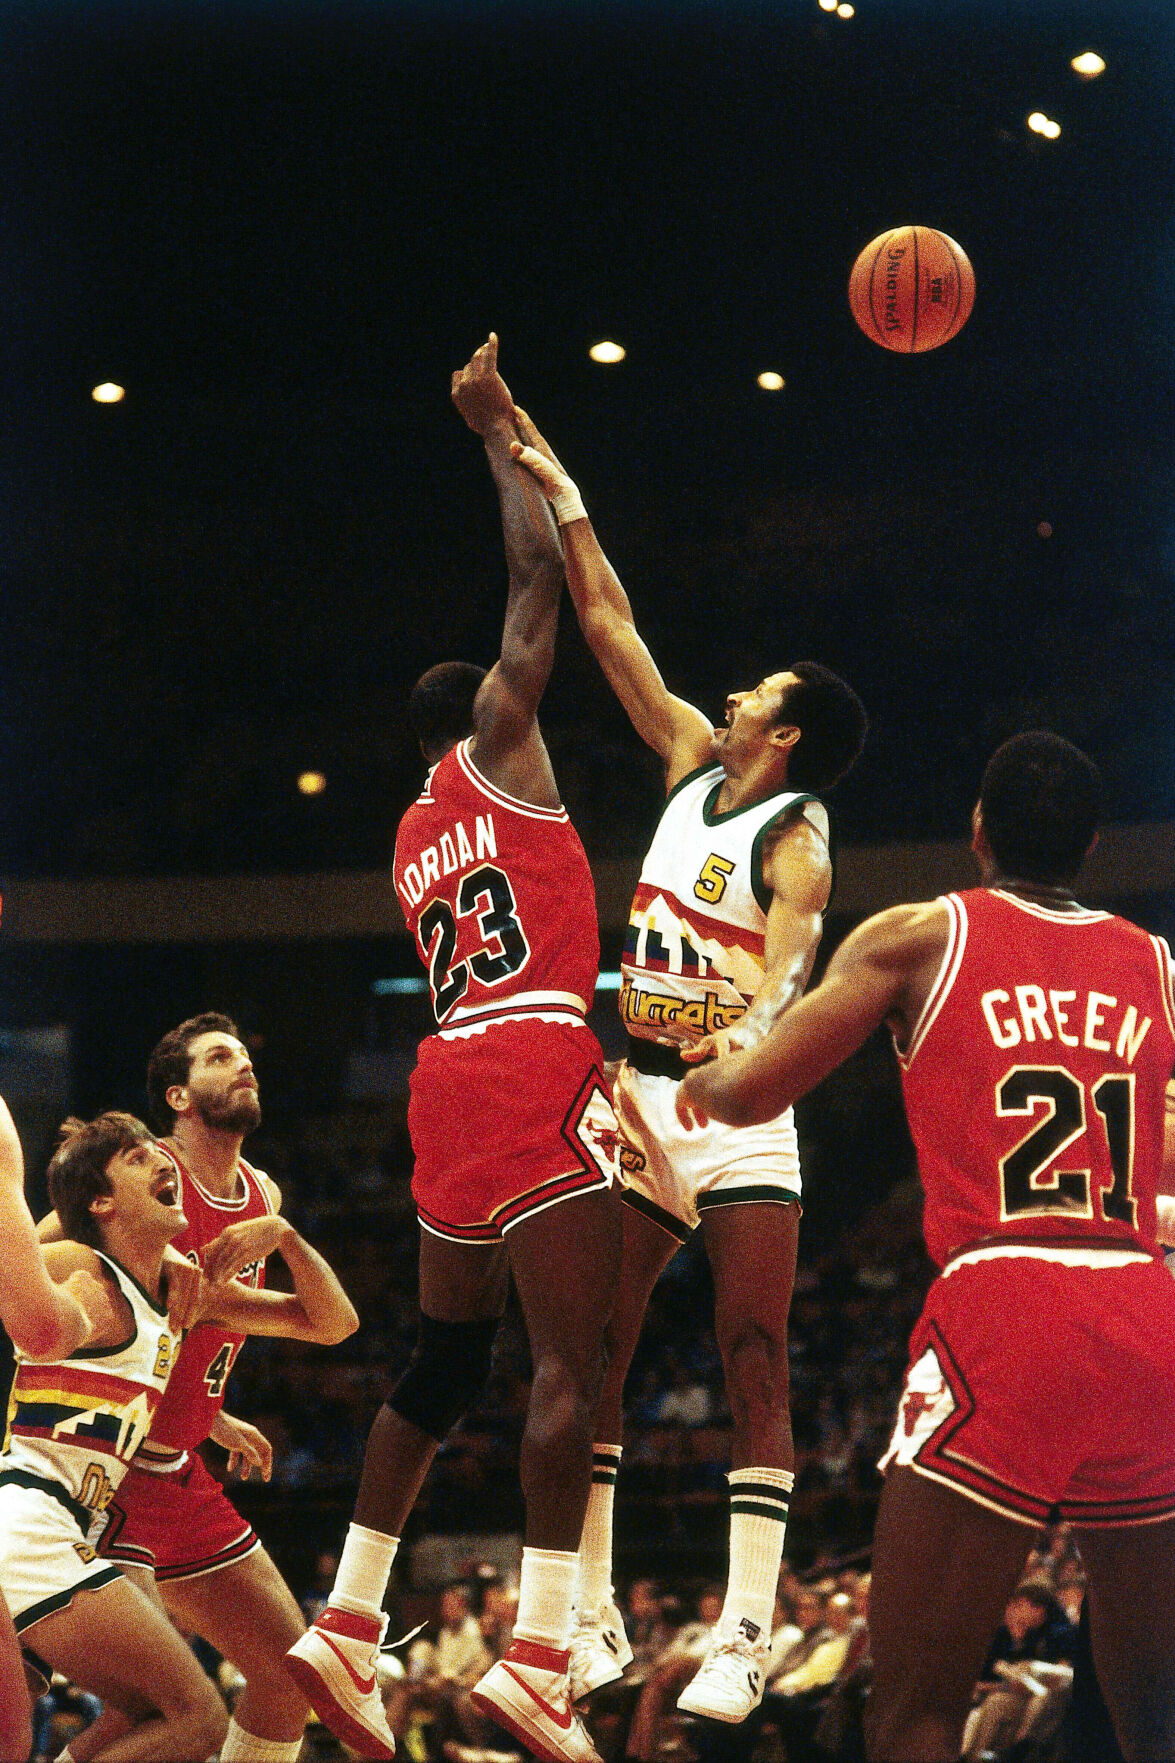 All Star Champions Jordan, Bird,,Iverson, McGrady Mens NBA Jersey.1988.  Size 60.